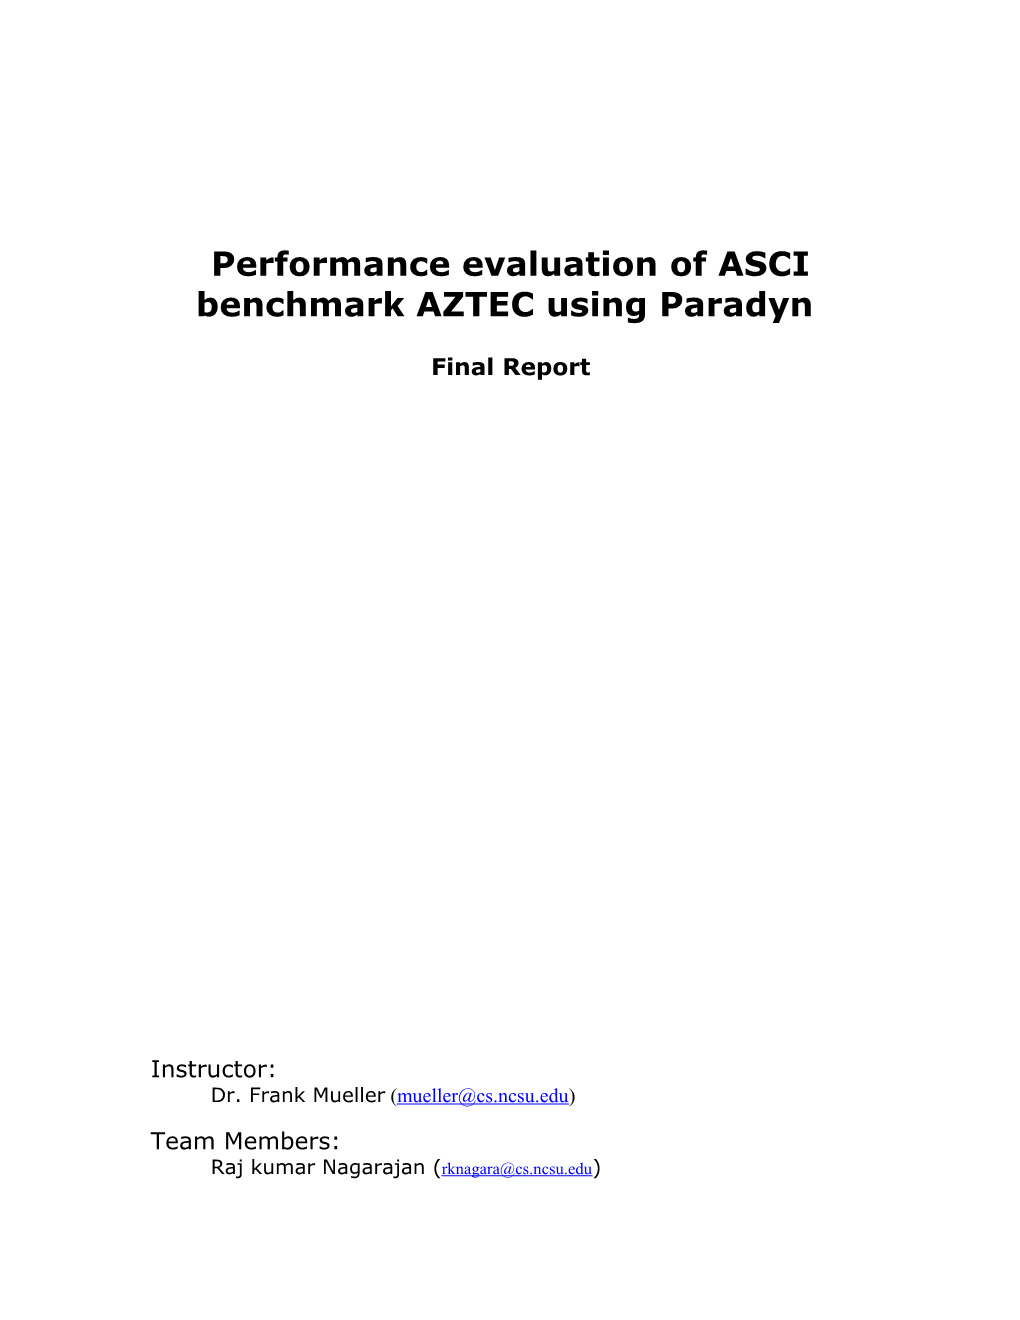 Performance Evaluation of ASCI Benchmark AZTEC Using Paradyn